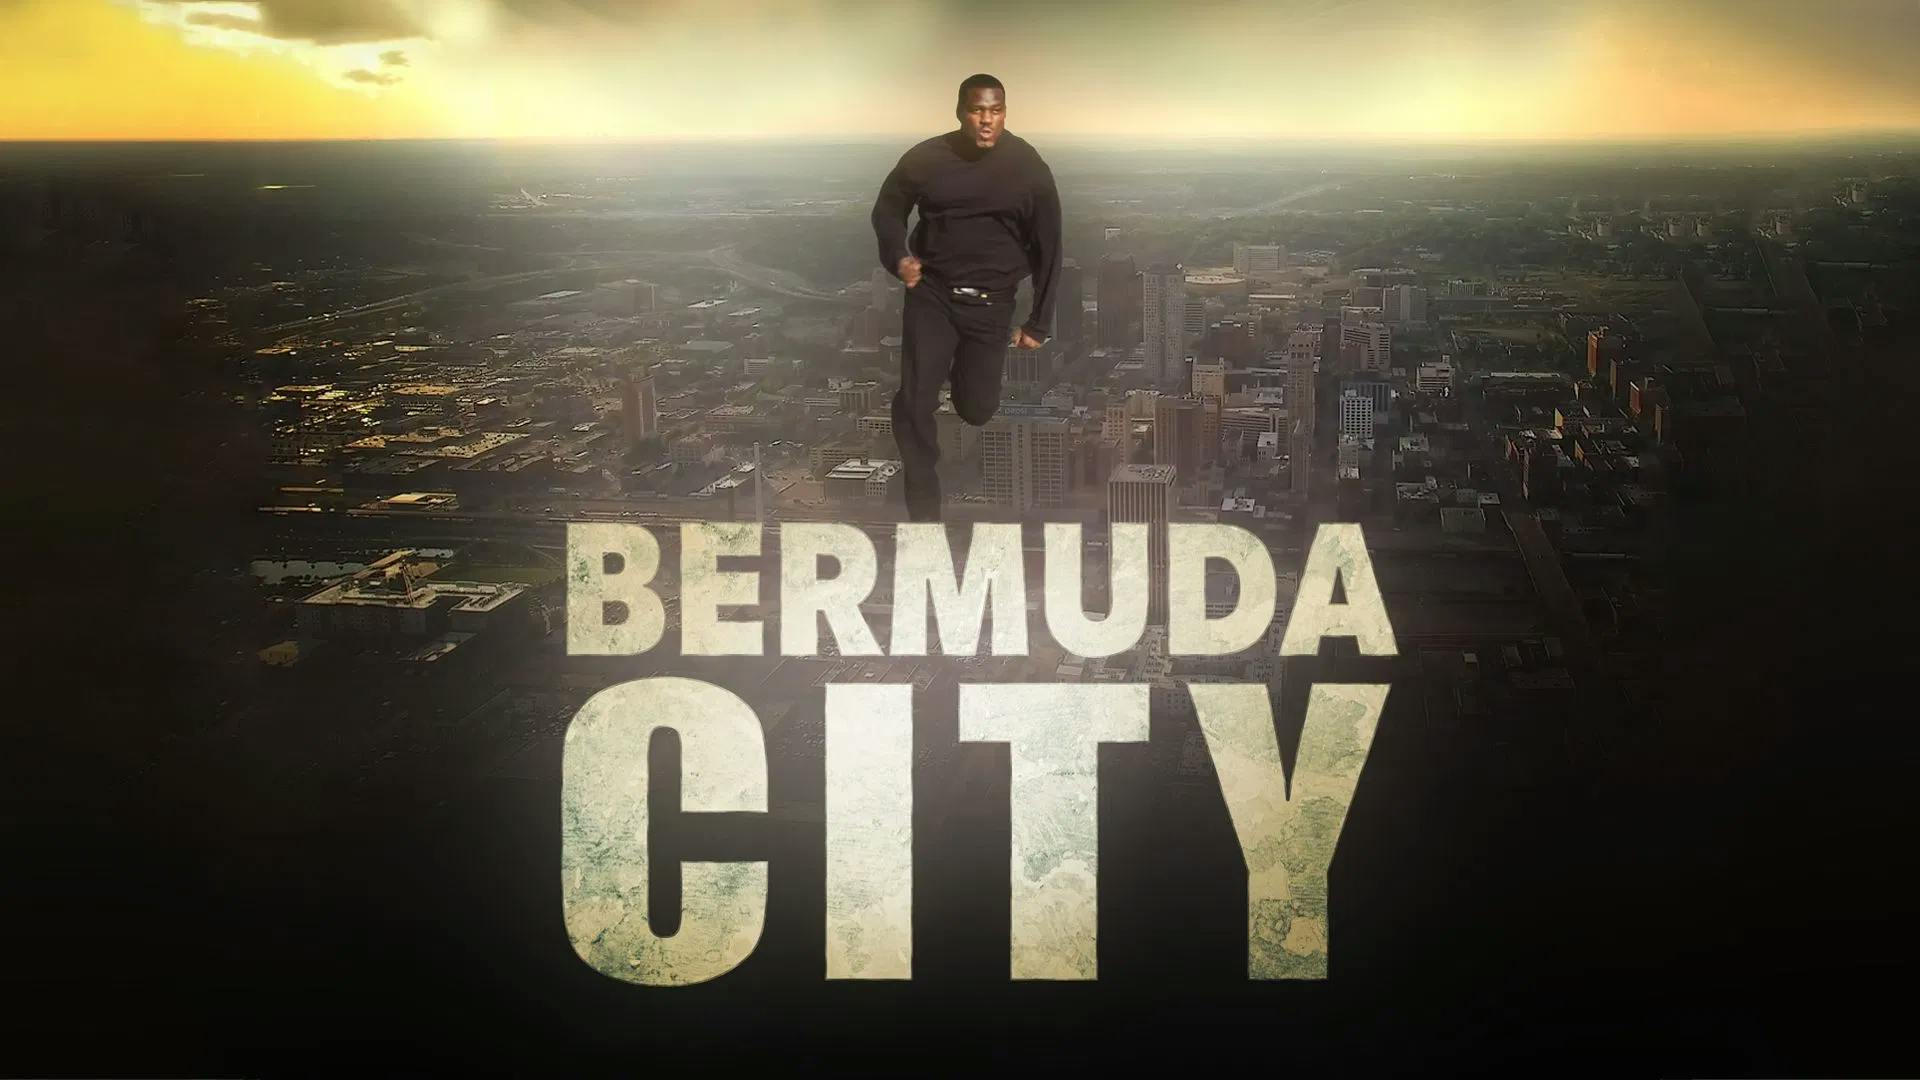 Bermuda City